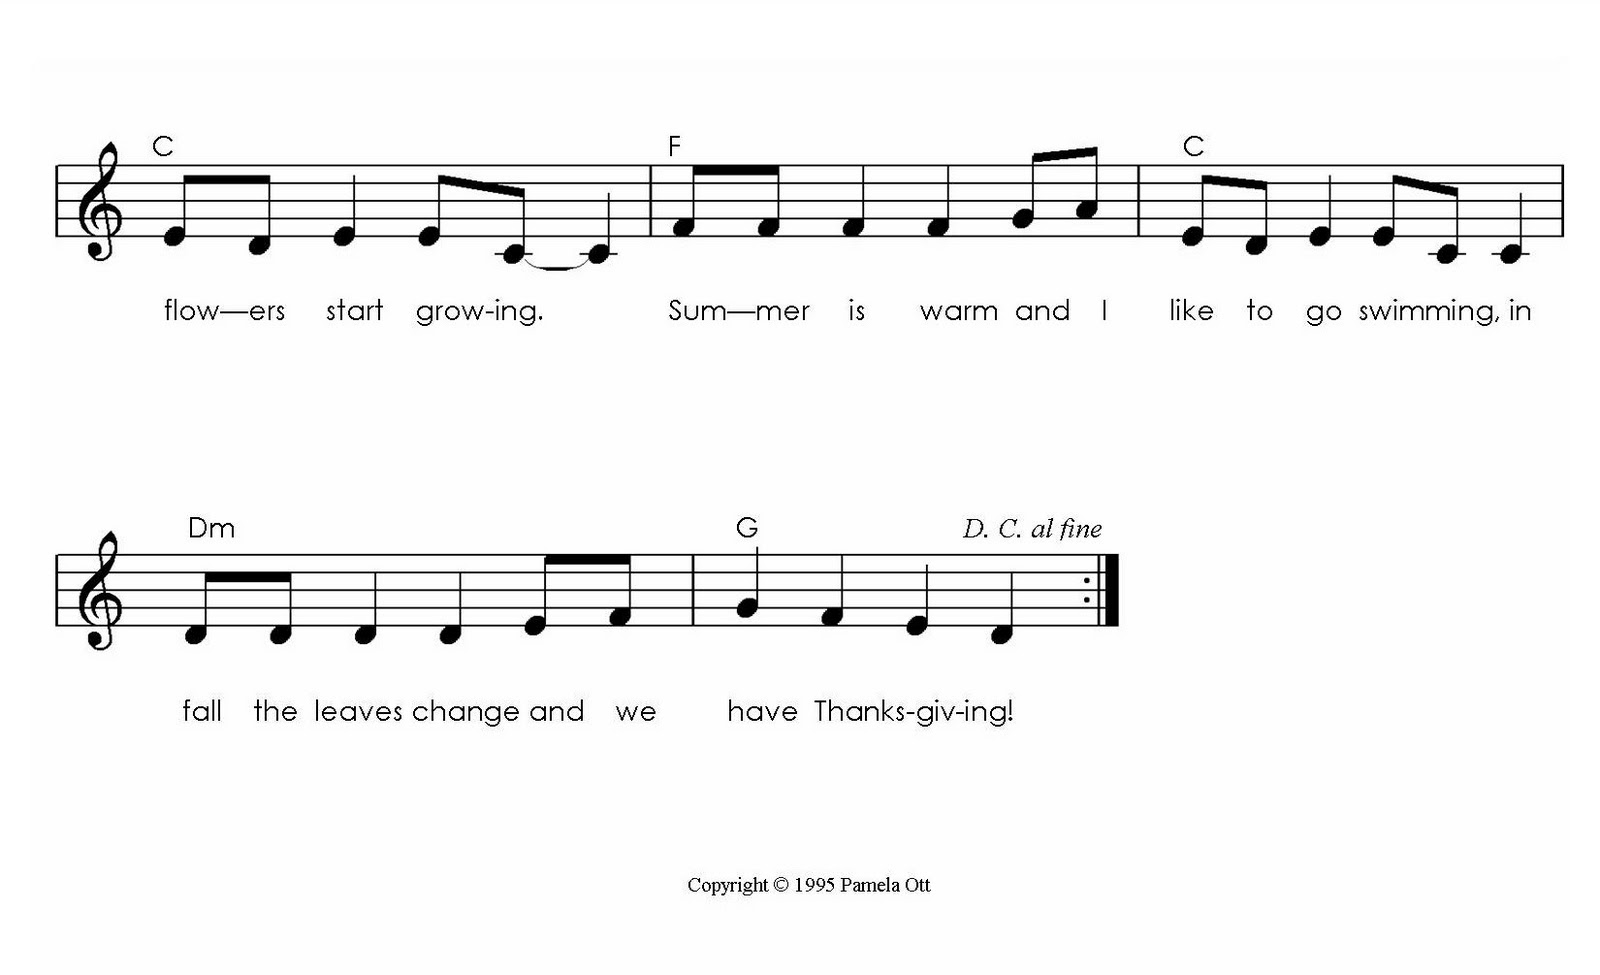 Seasons Of Love Piano Chords